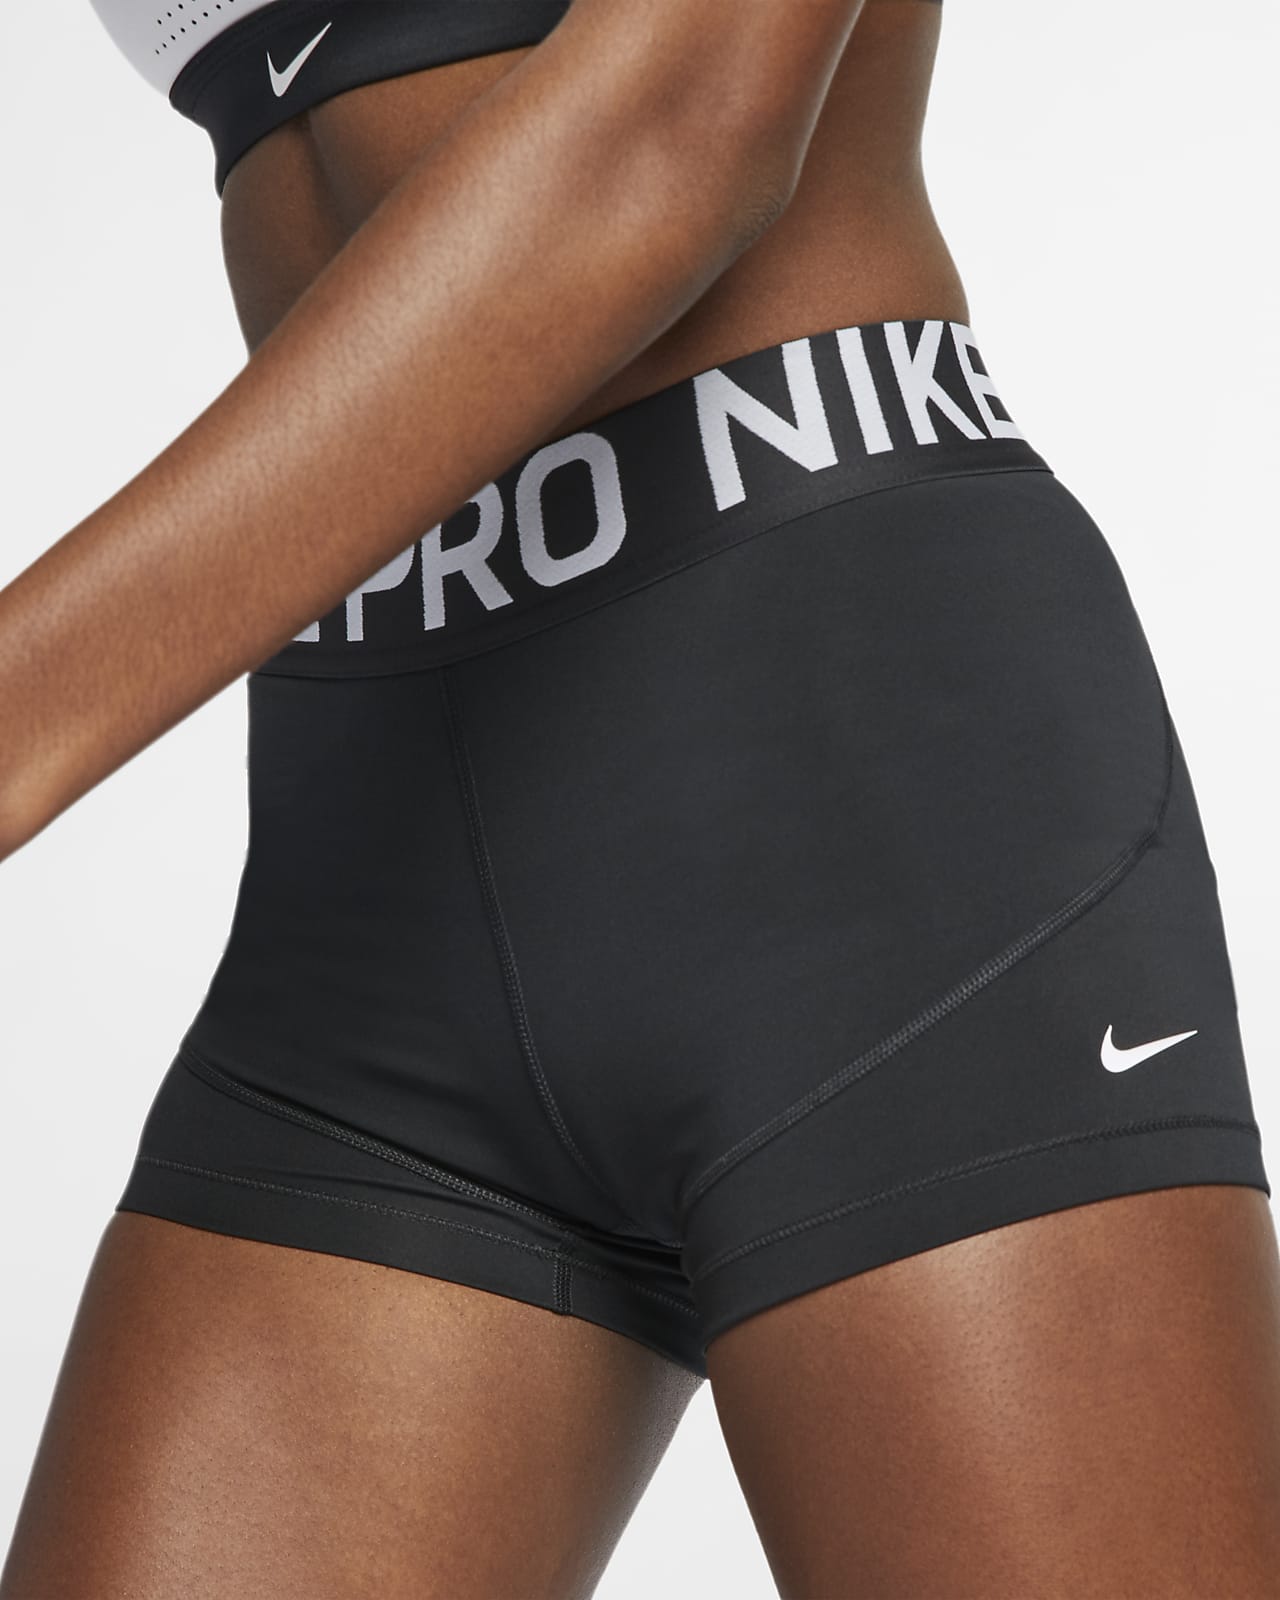 nike pro shorts high waist